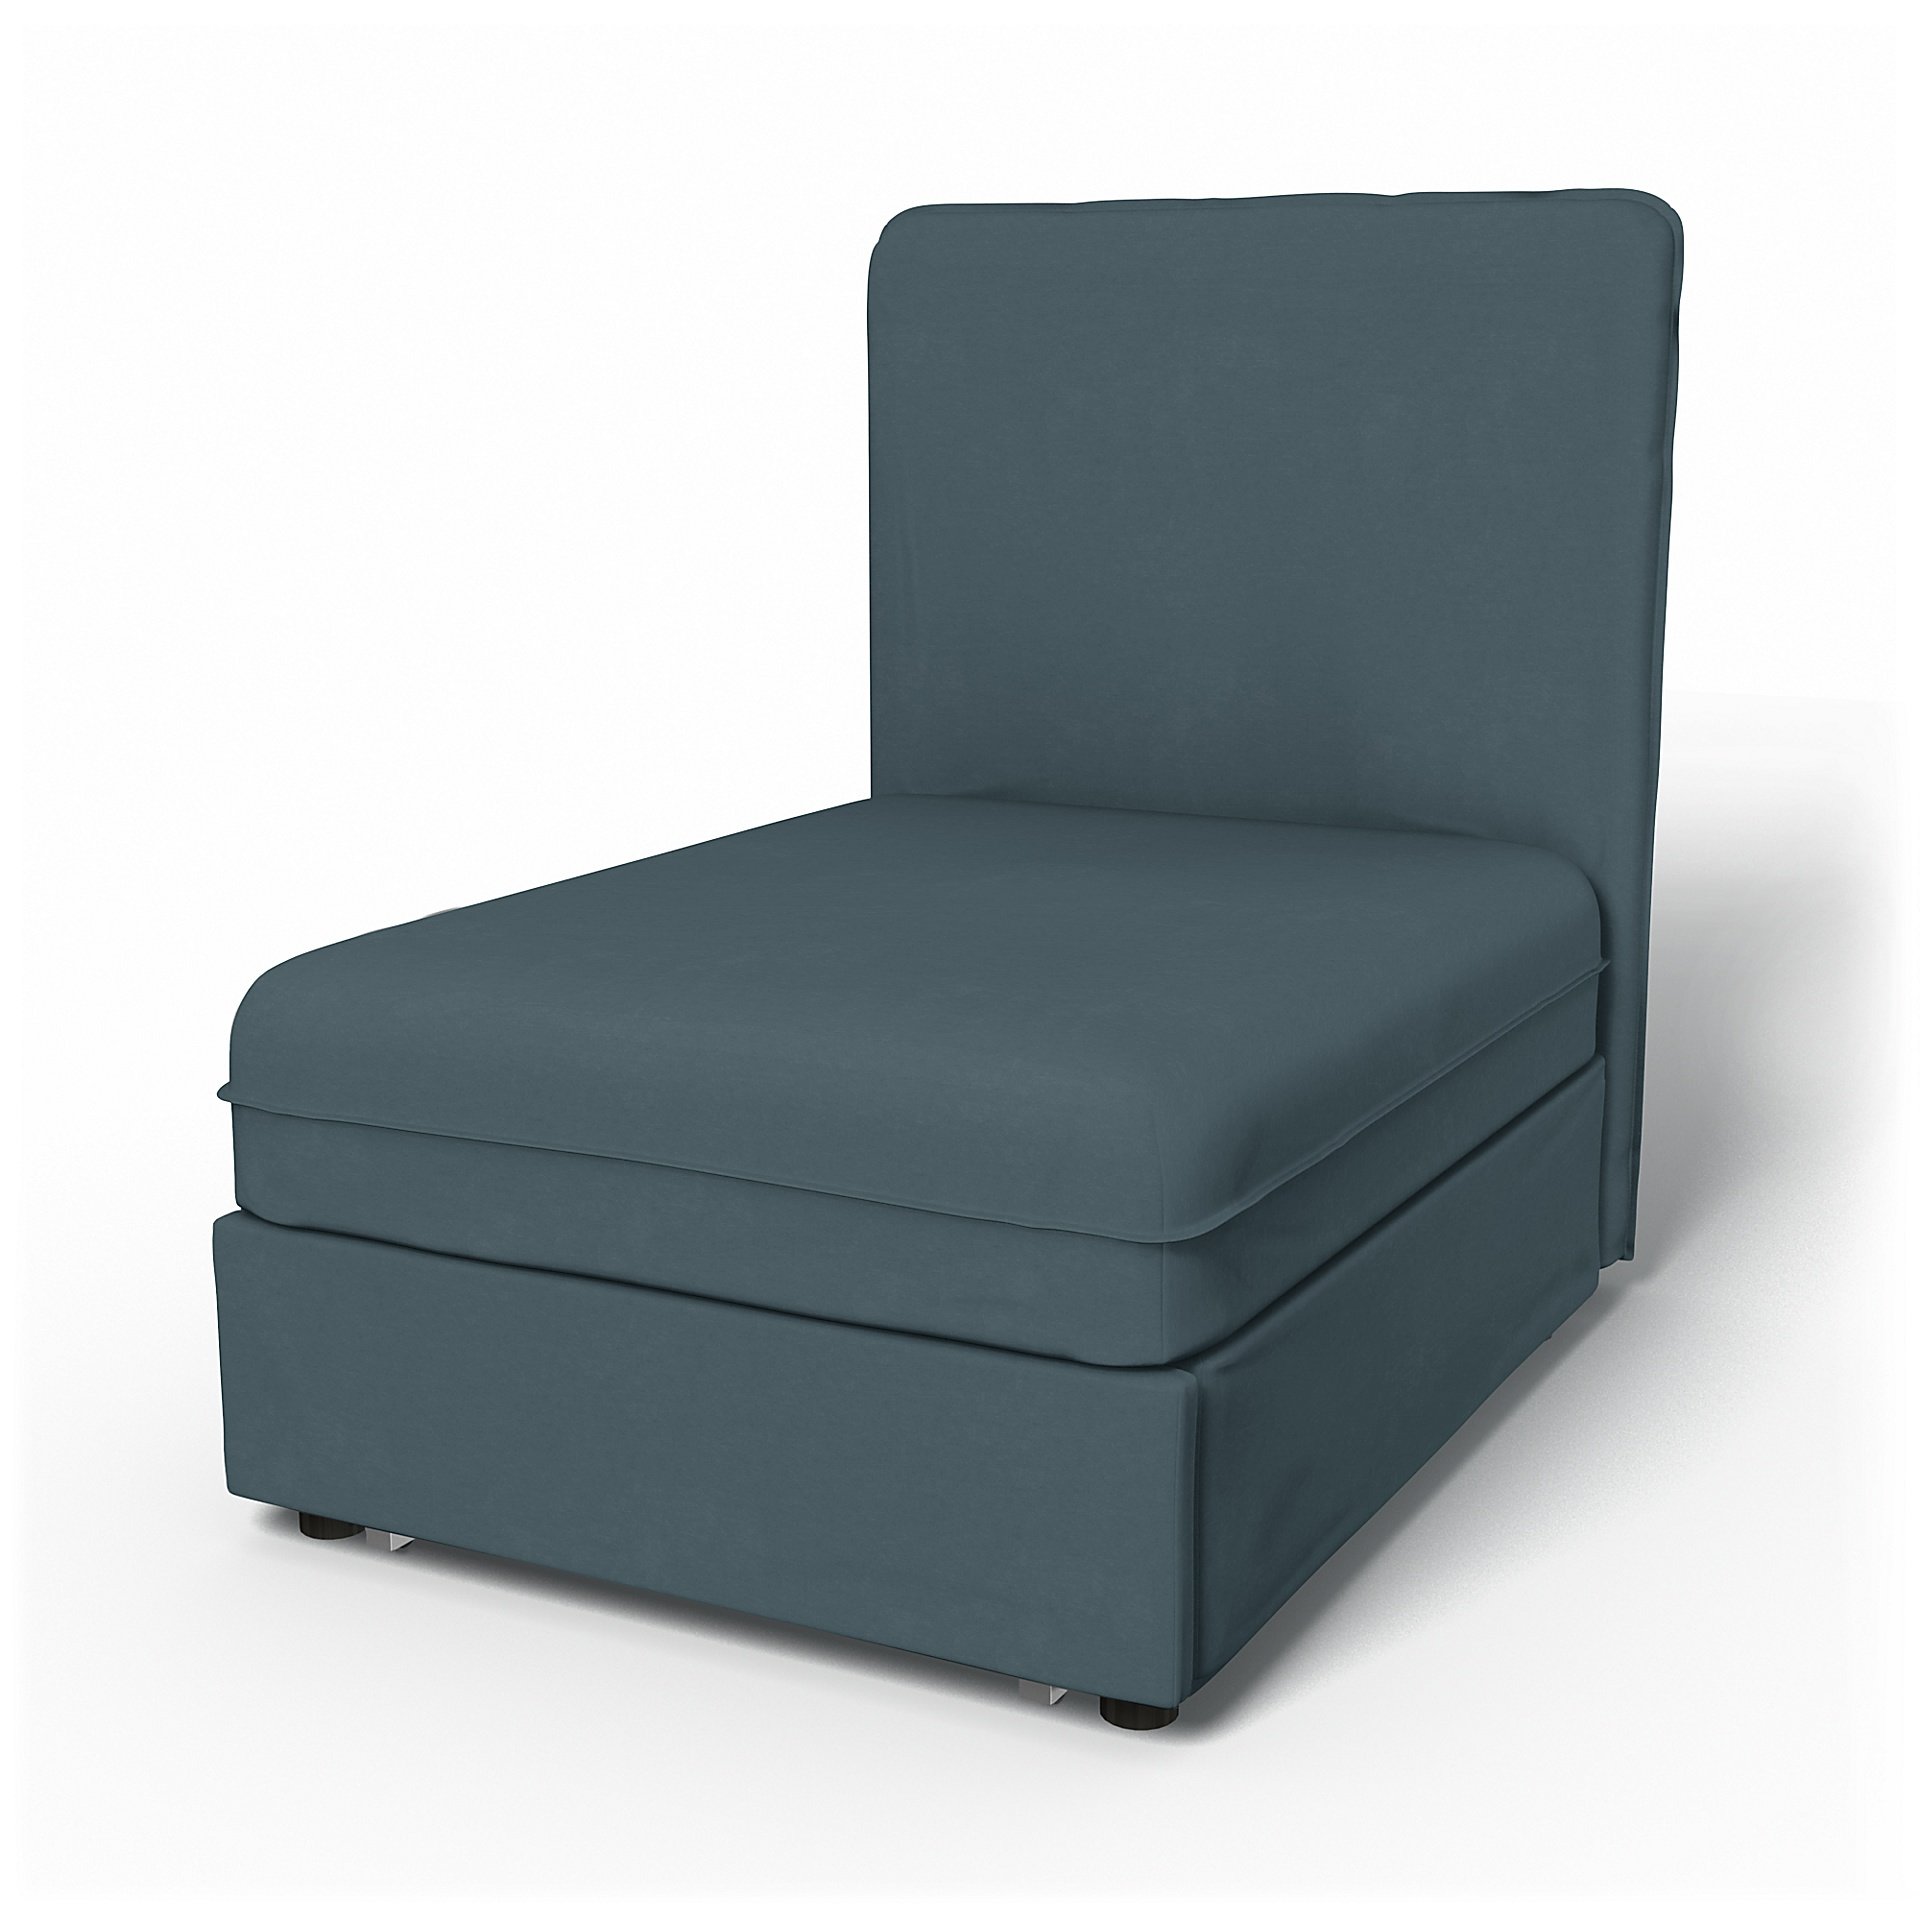 IKEA - Vallentuna Seat Module with High Back Sofa Bed Cover (80x100x46cm), Duck Egg, Velvet - Bemz